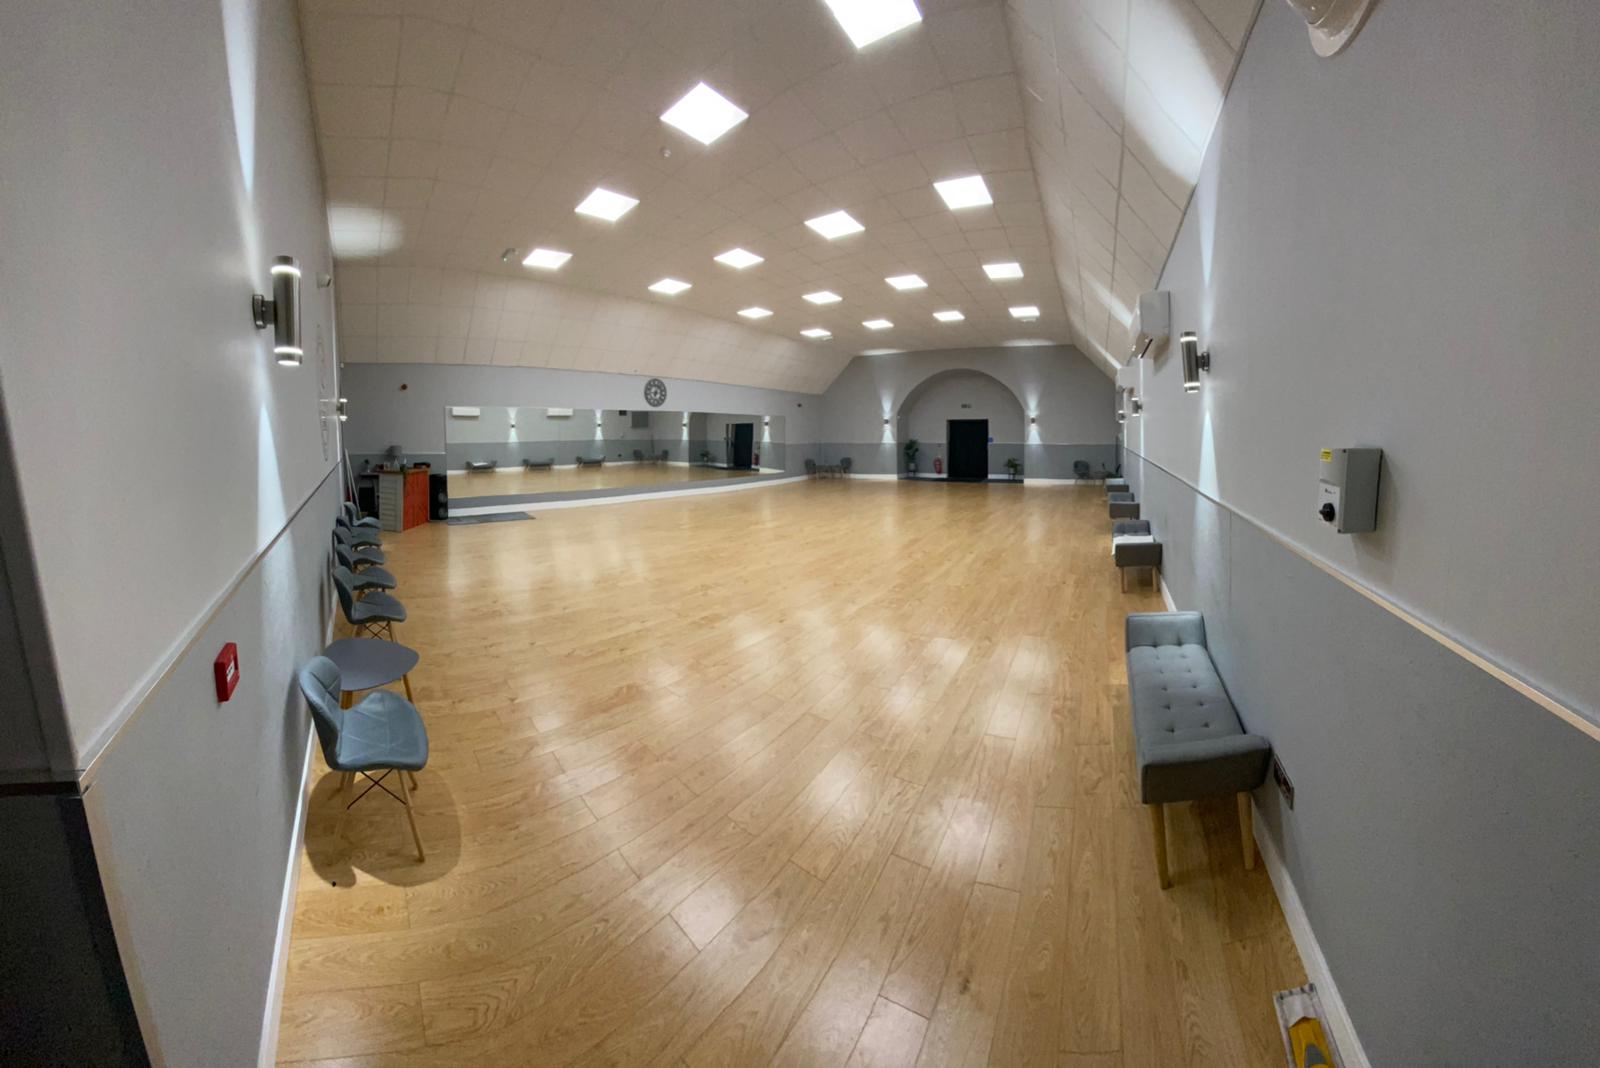 Dance centre